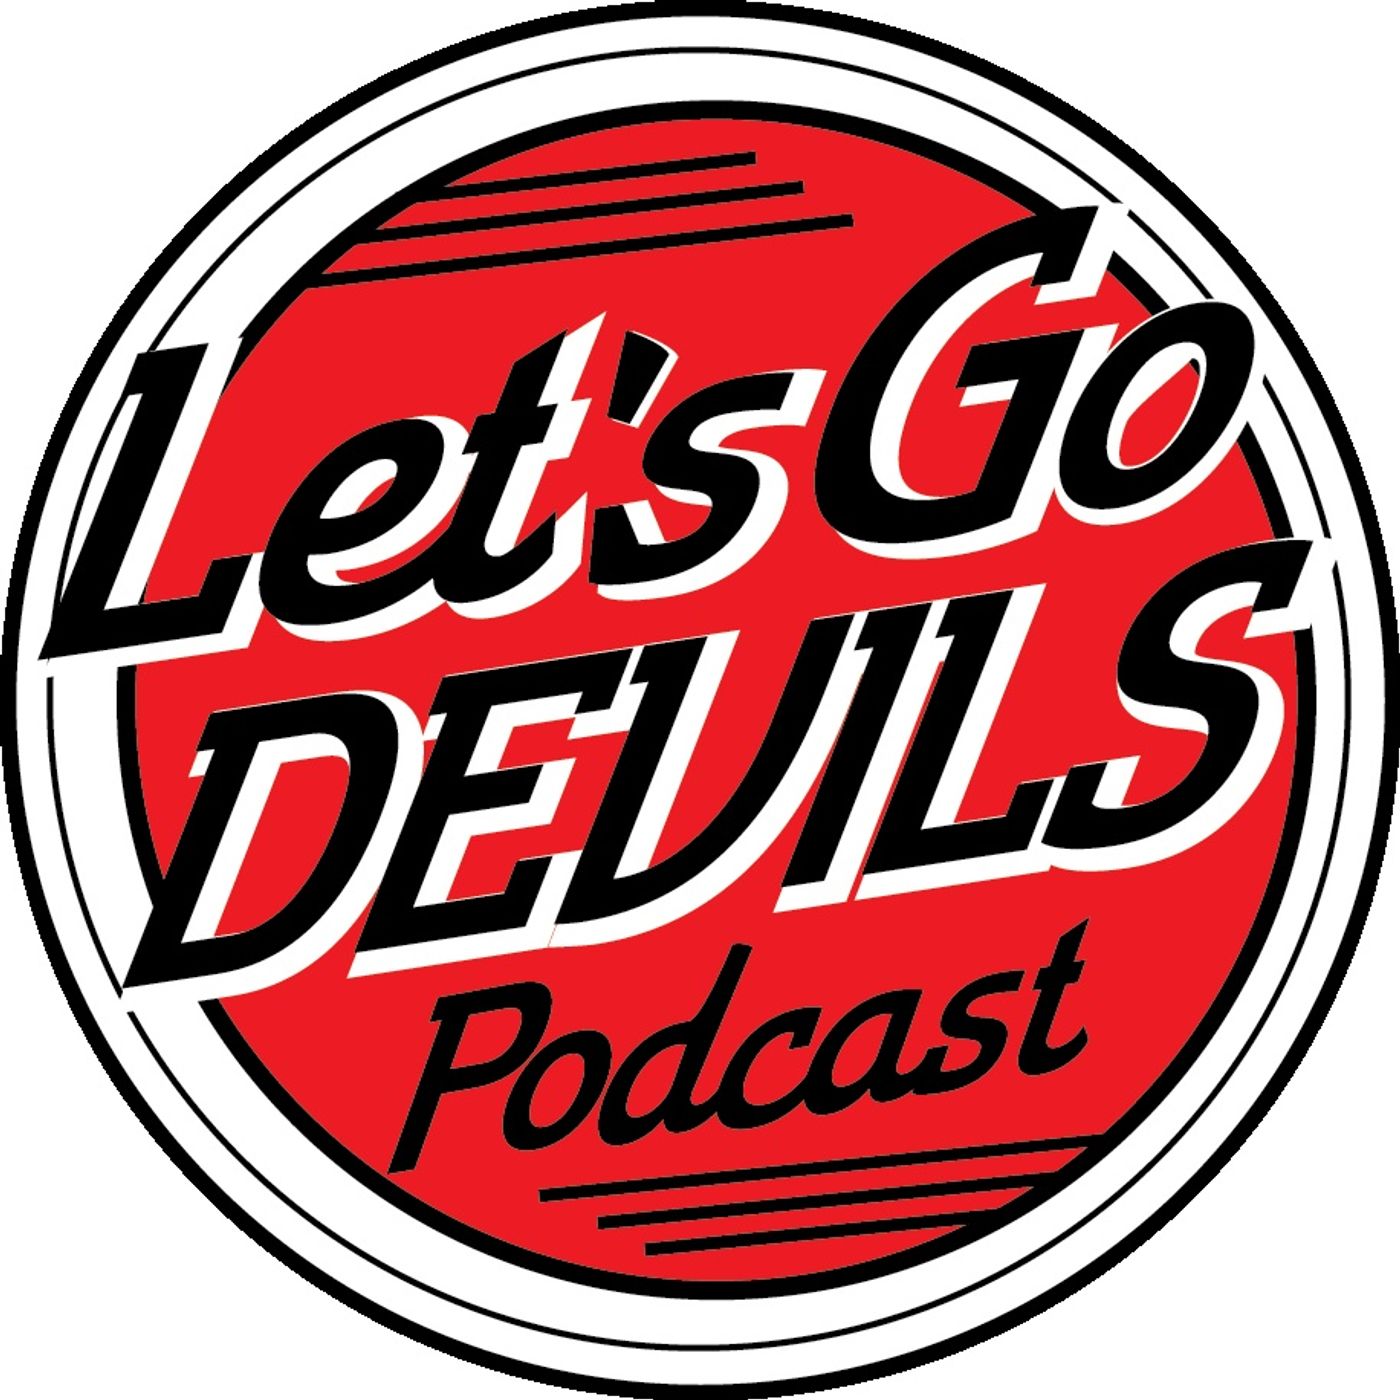 Let’s Go Devils Podcast